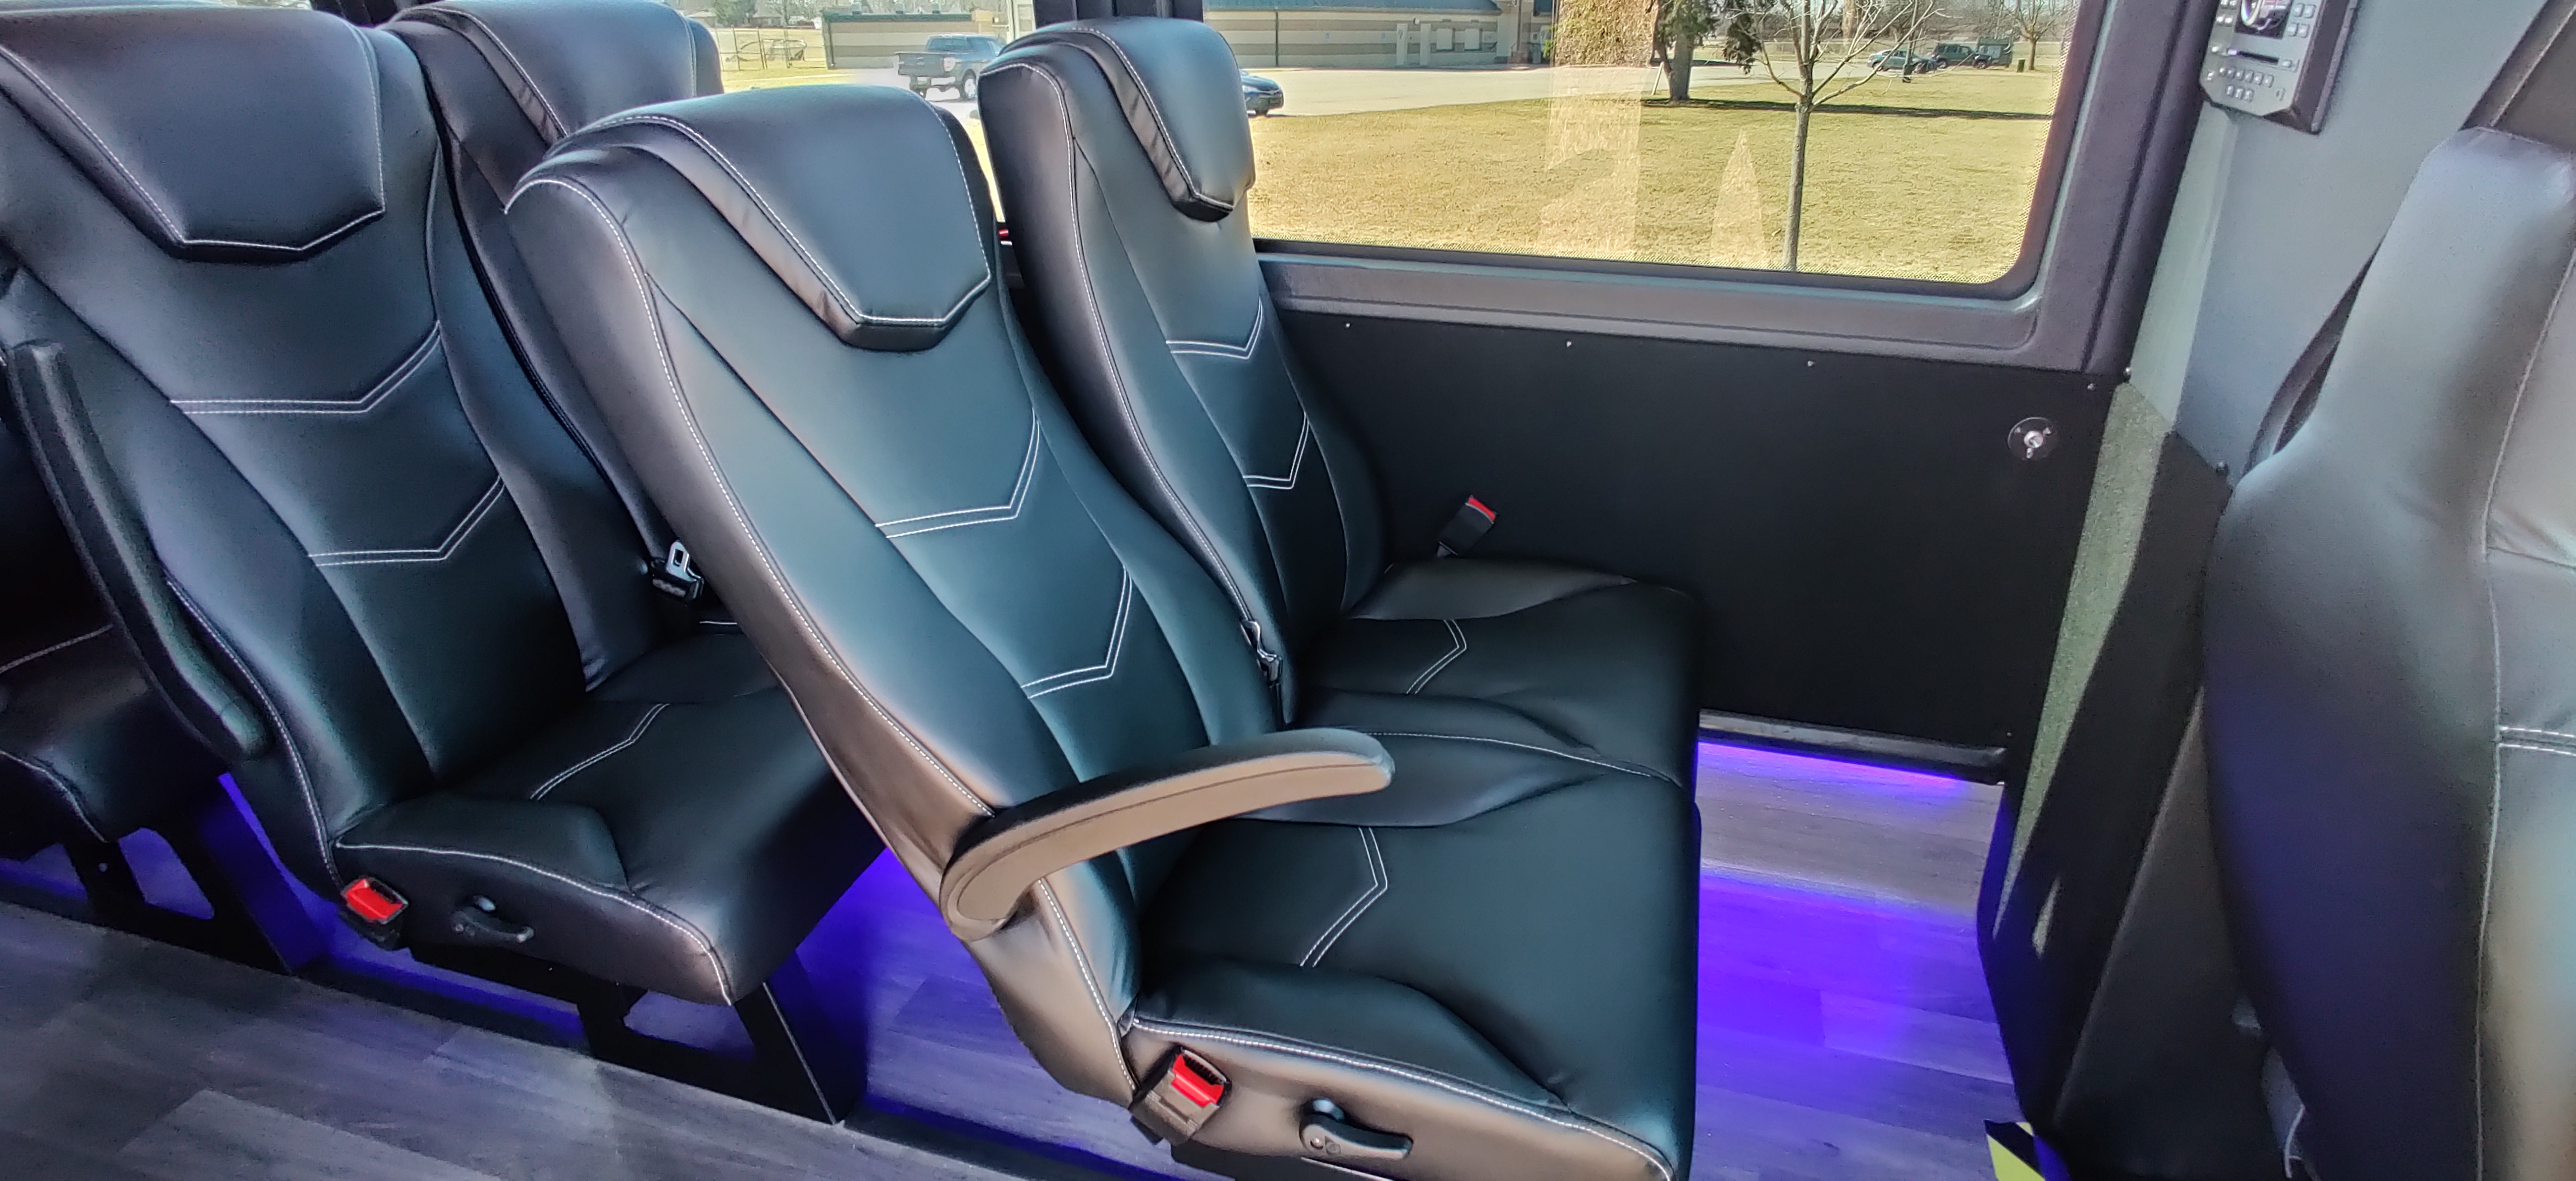 23 Passenger Executive Shuttle Bus Seating Comfort